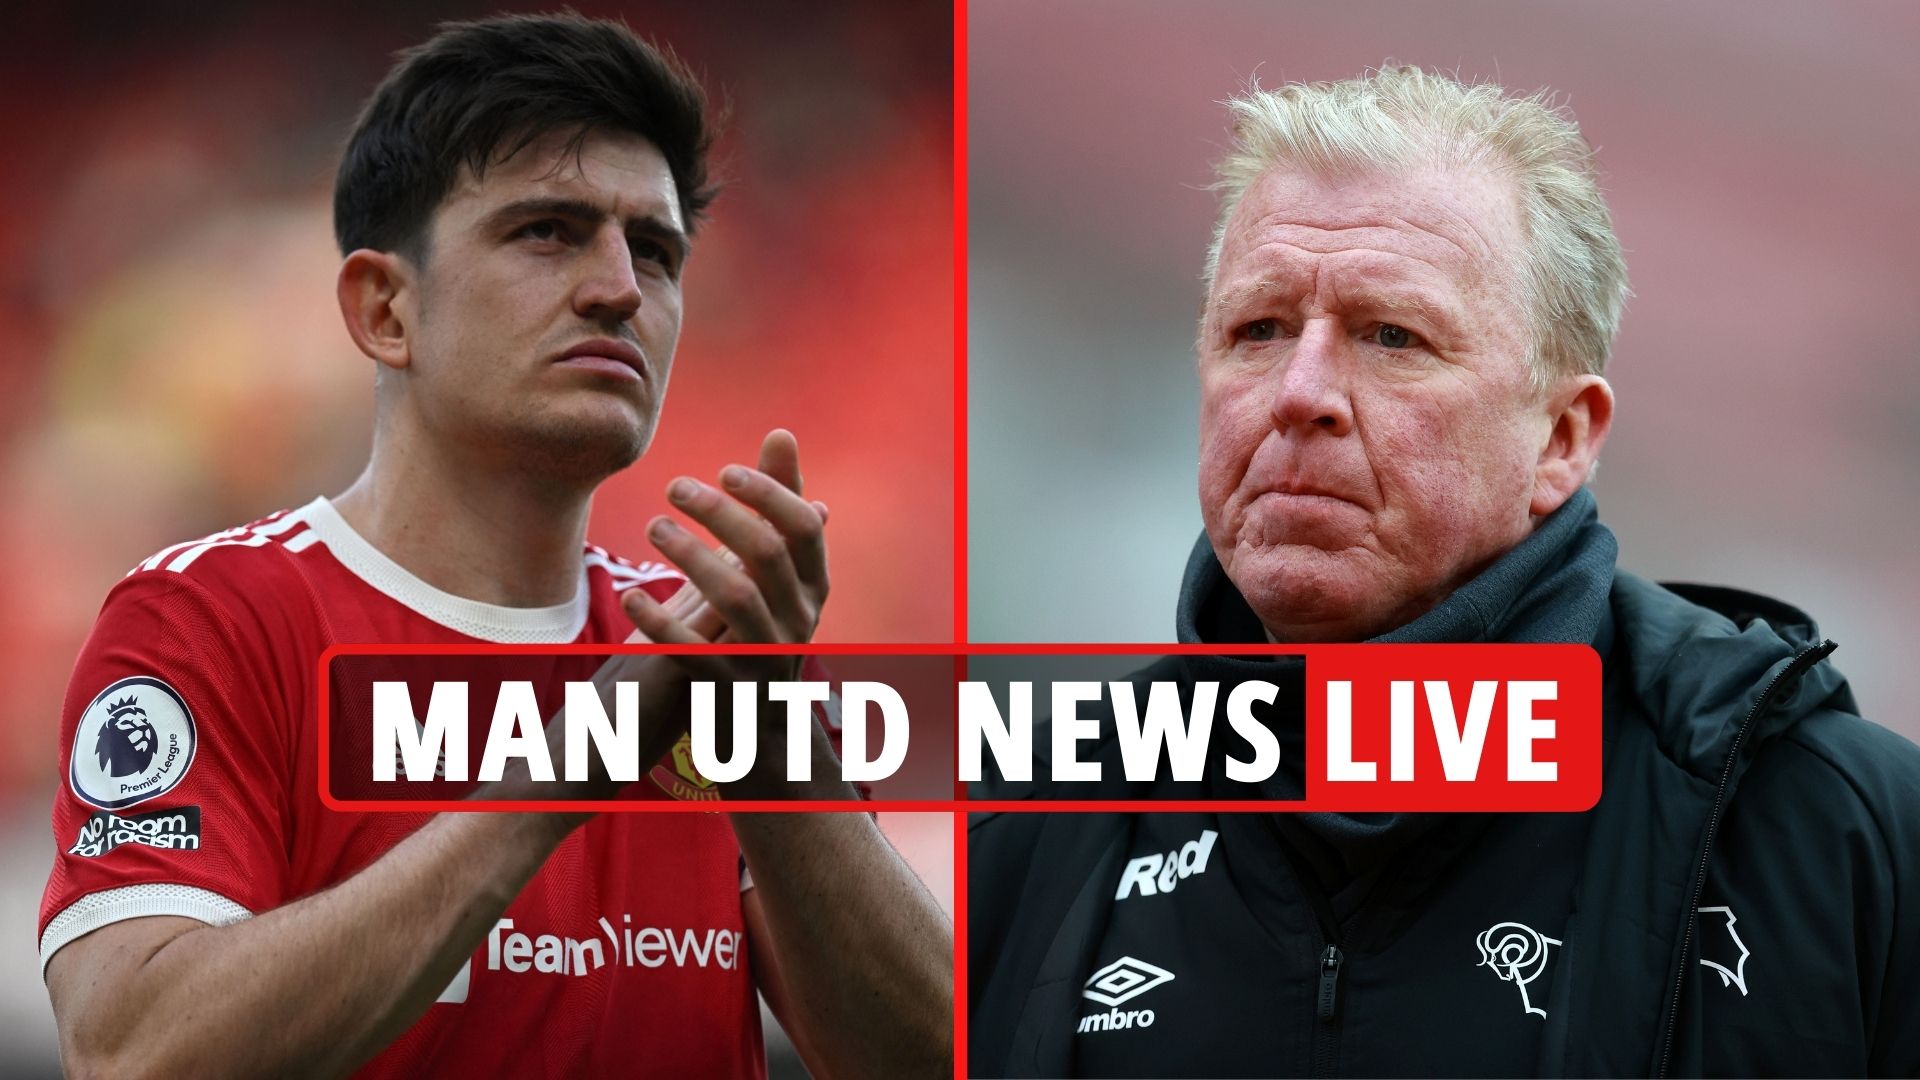 Man Utd news LIVE: Latest updates from Old Trafford